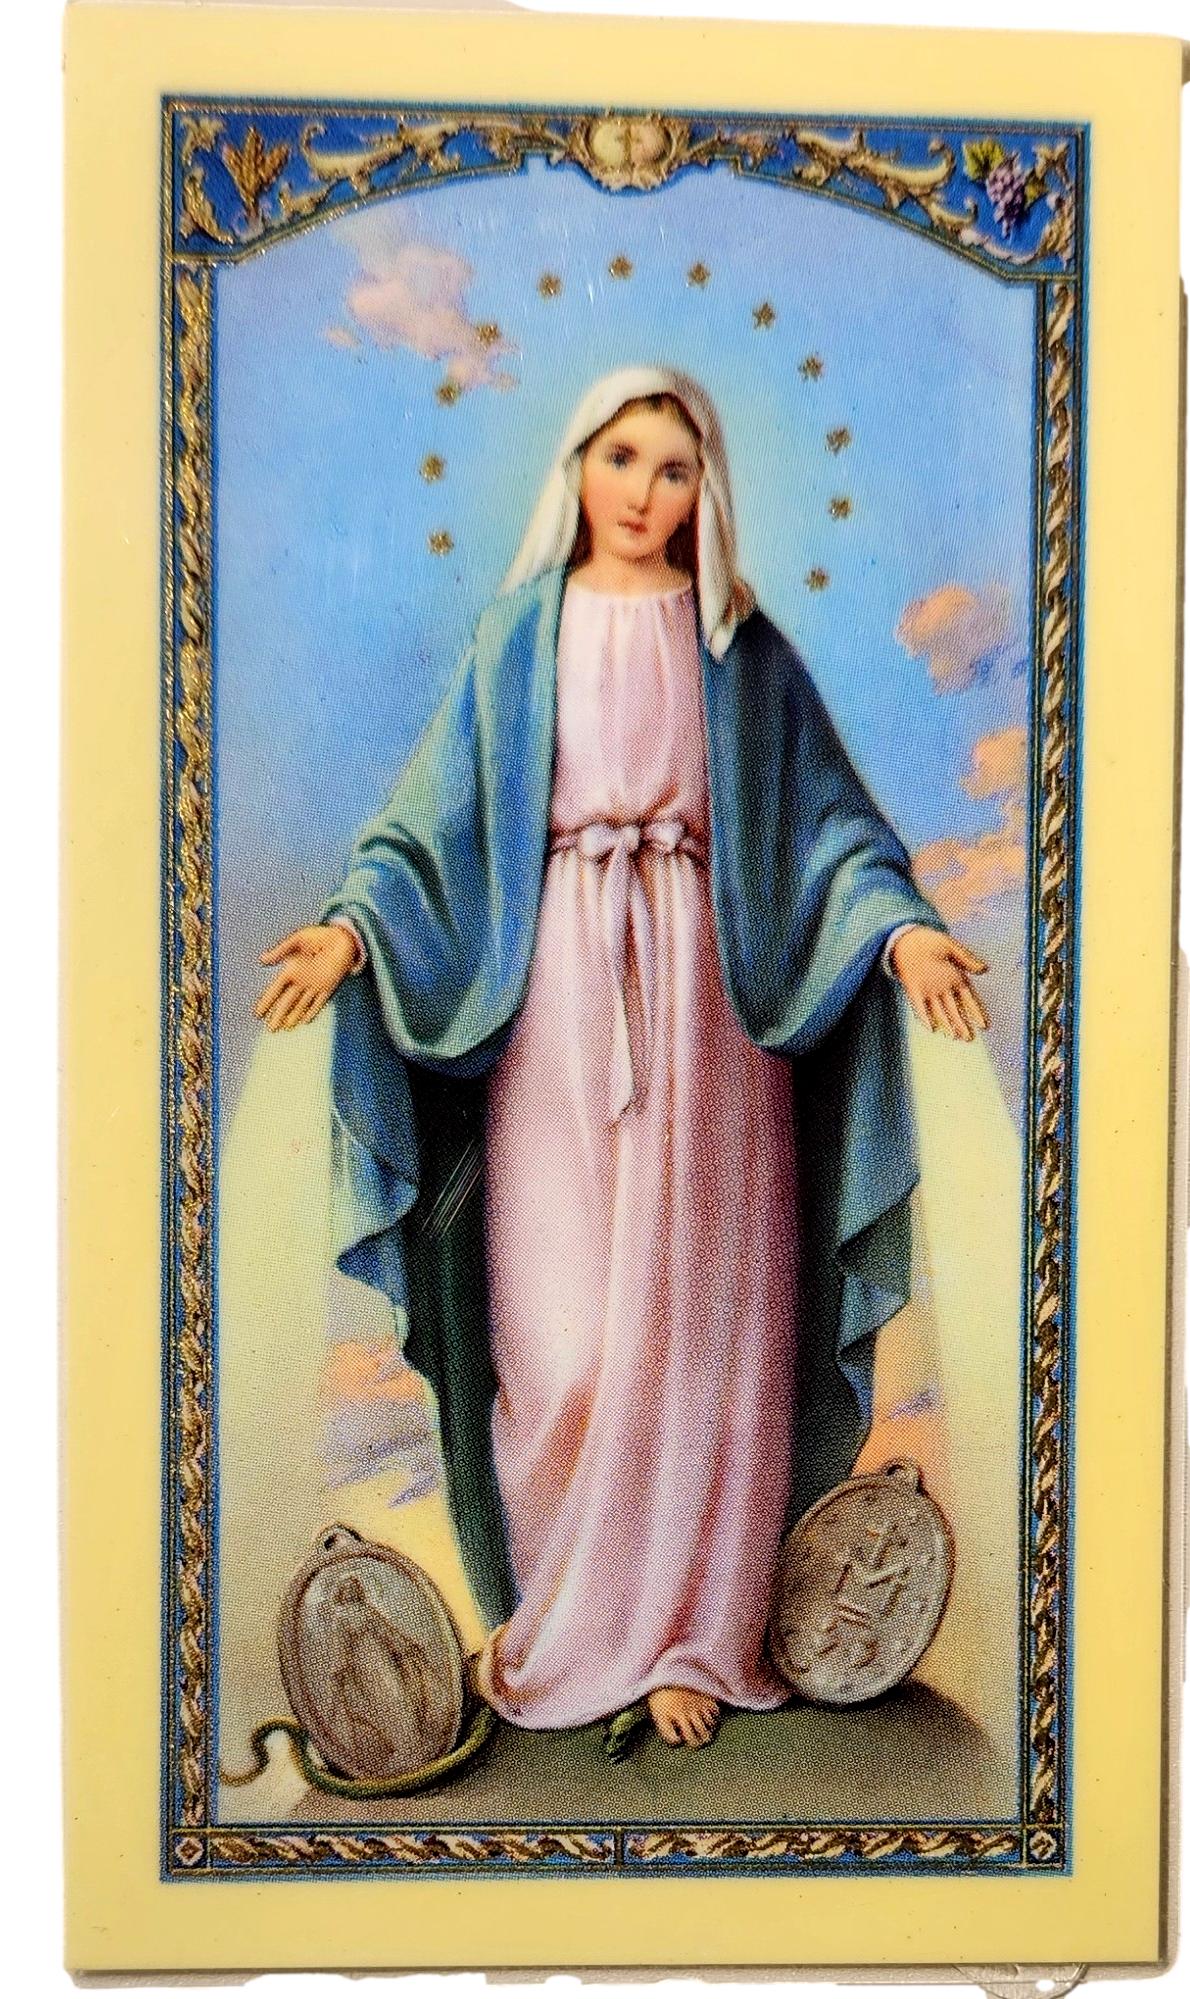 Prayer Card The Memorare Of Saint Bernard Laminated AF